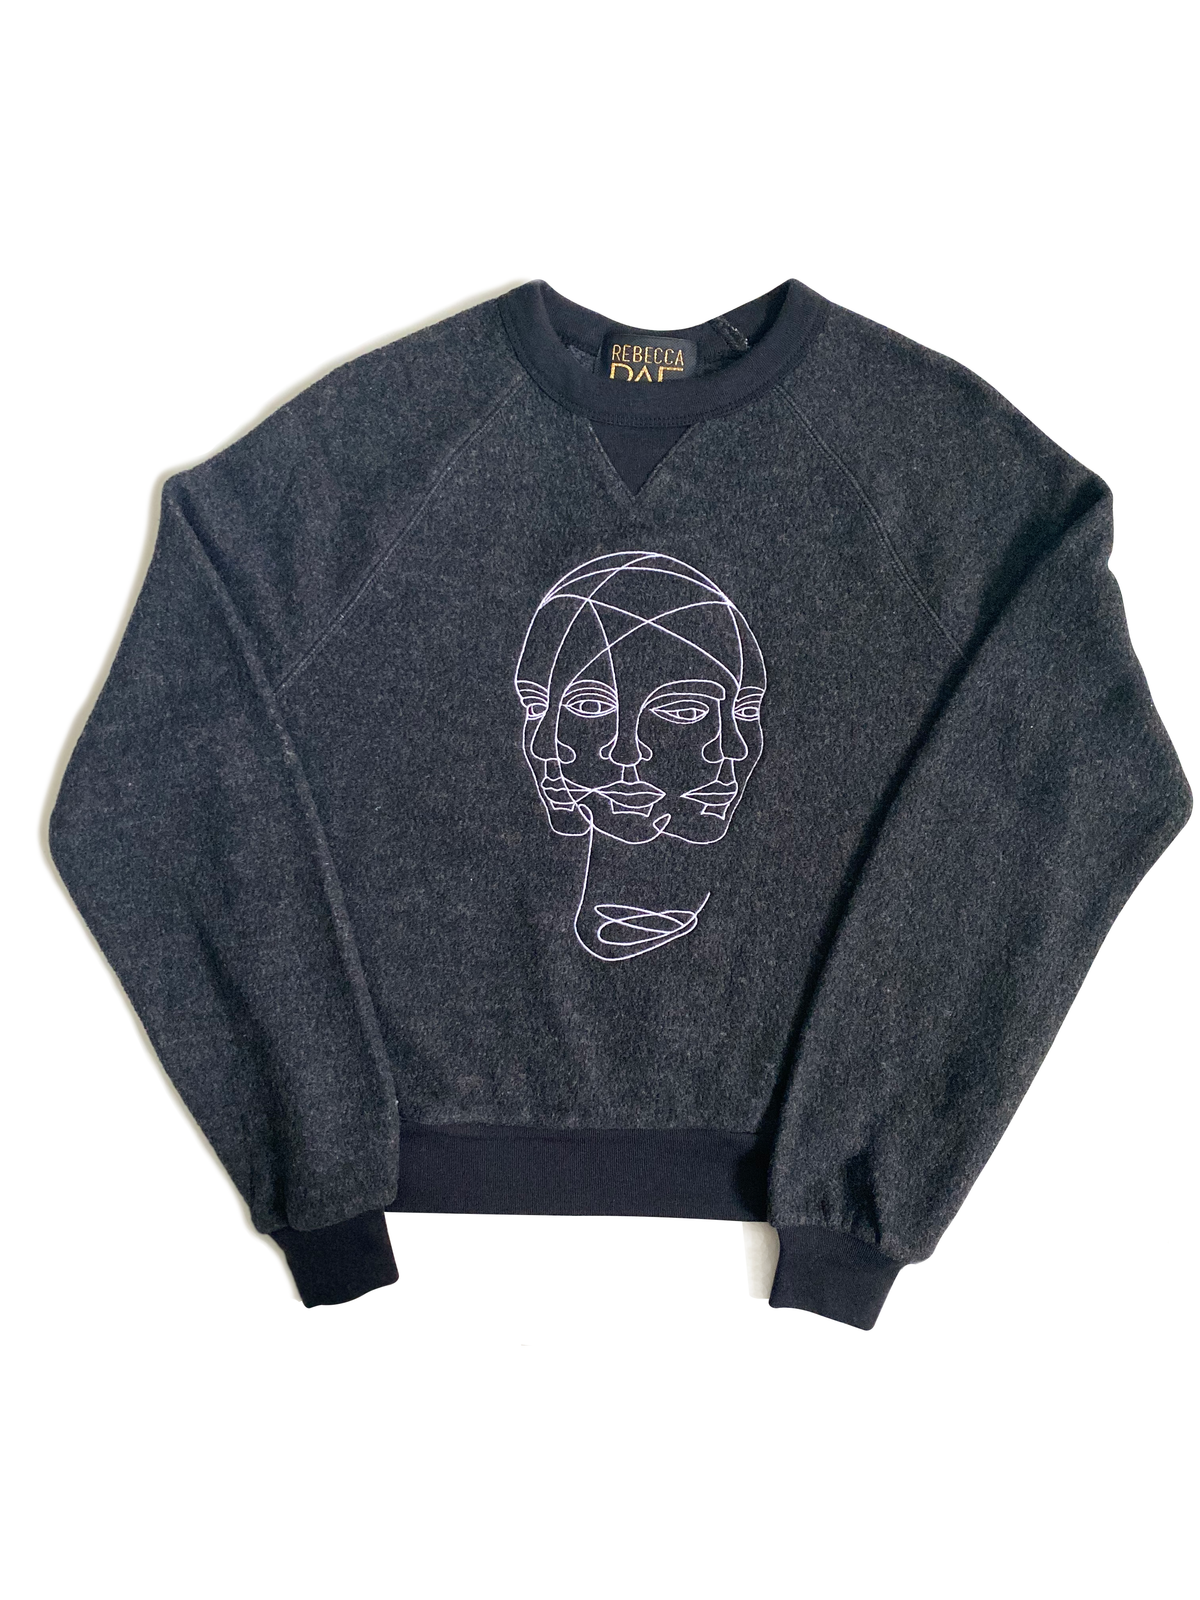 Pullover Crewneck, Cozy Eco-Fleece, Embroidered Sweatshirt - Mindfulness Full Length